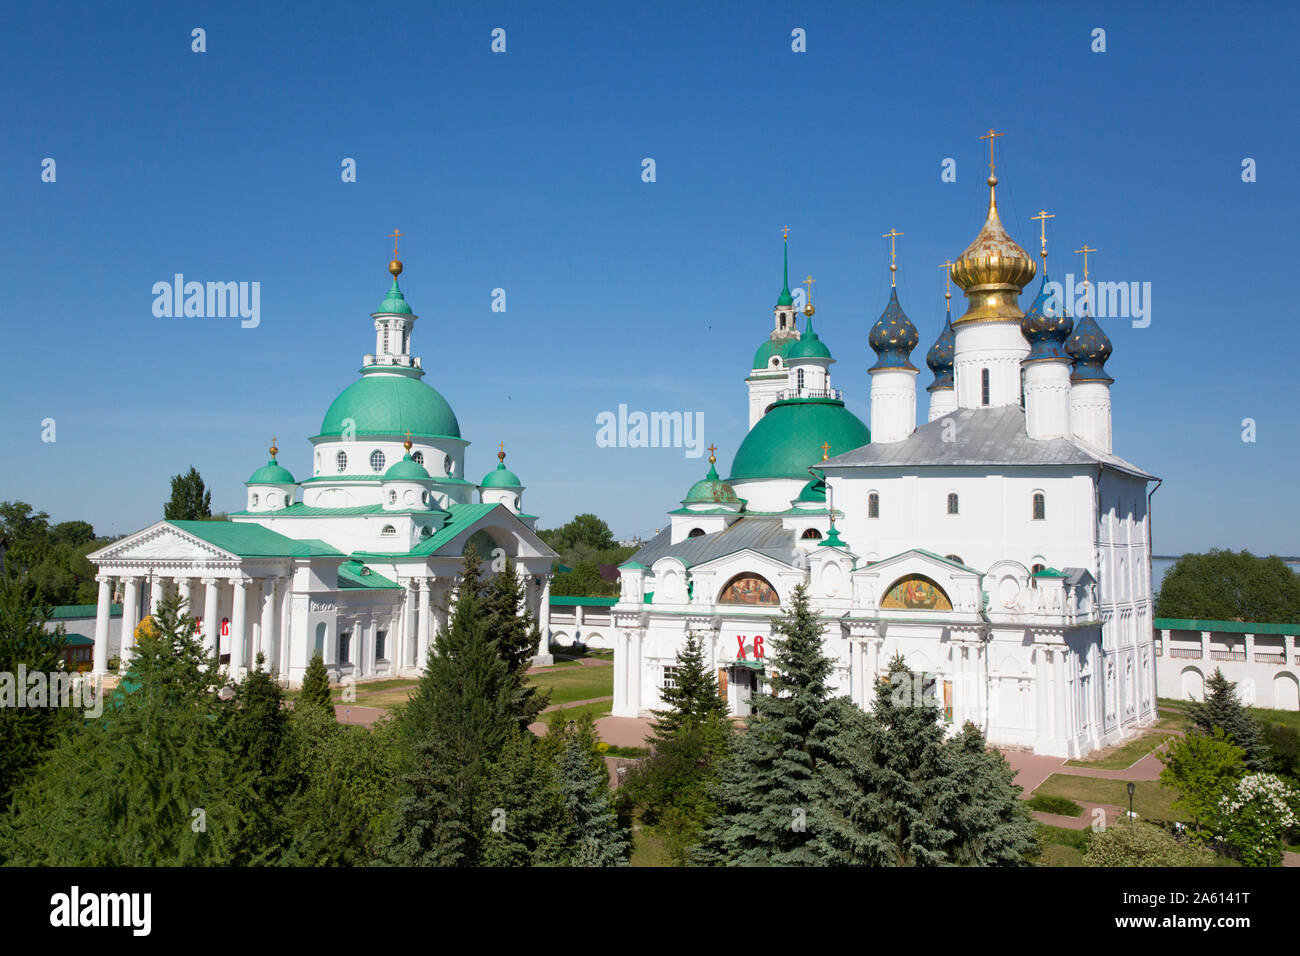 Spaso-Yakovlevsky Monastery dating from the 14th century, near Rostov Veliky, Golden Ring, Yaroslavl Oblast, Russia, Europe Stock Photo